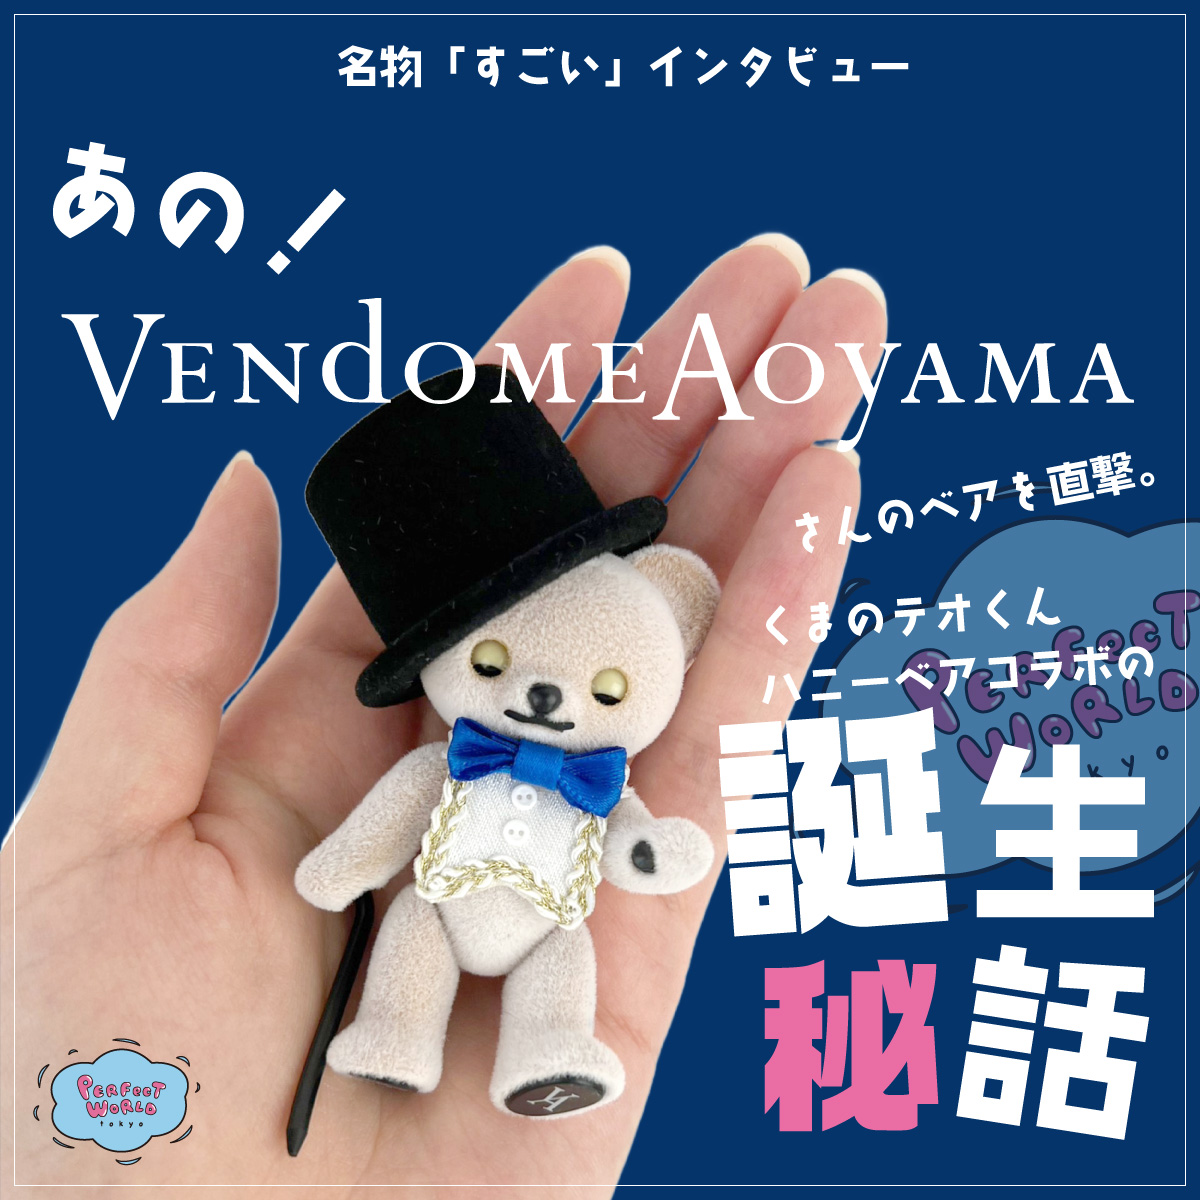 Vendome Aoyama ヴァンドーム青山 ピンバッチ テオくん - アクセサリー